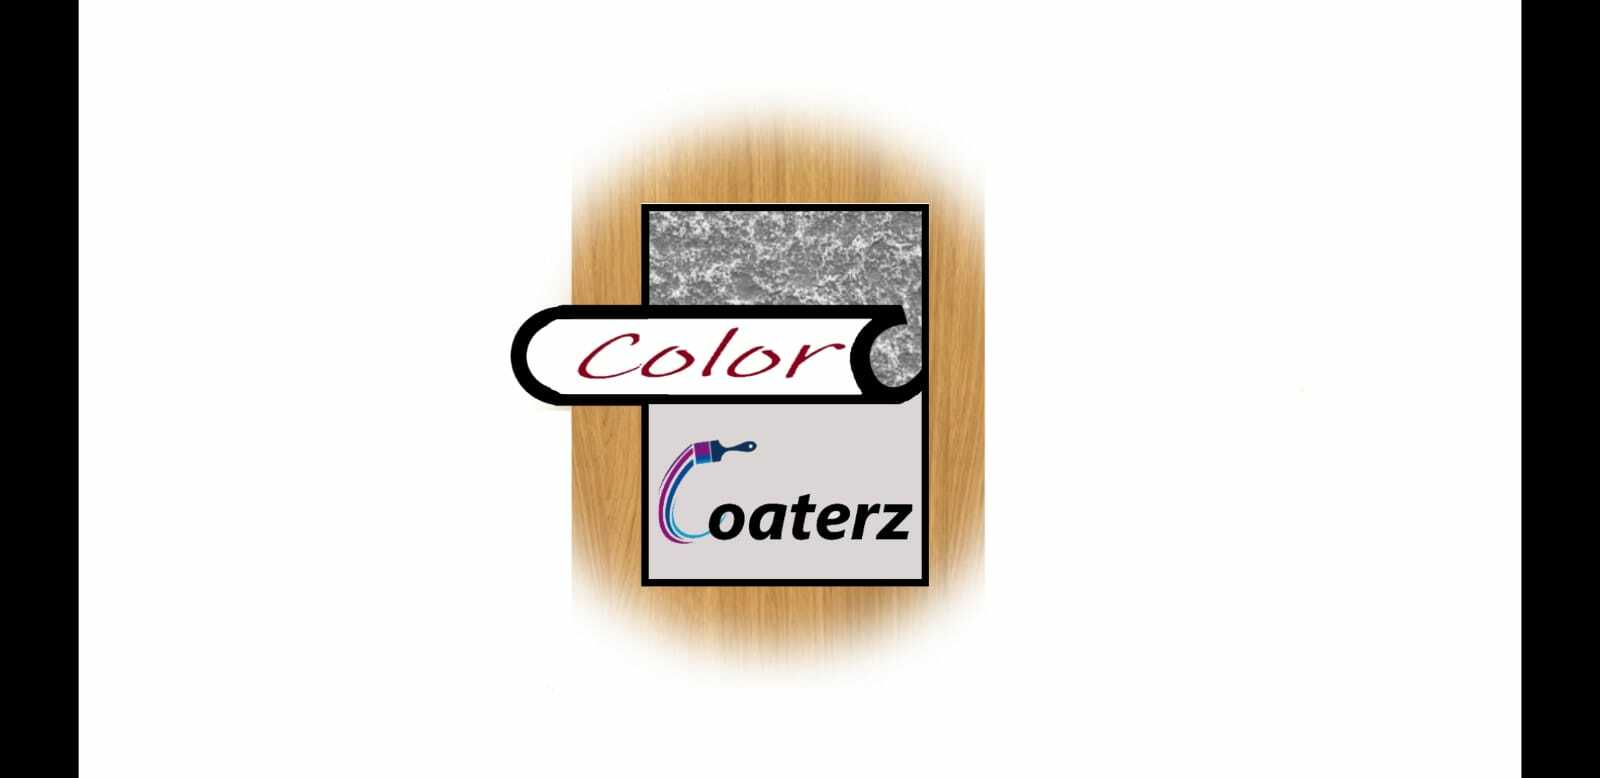 Color Coaterz's logo